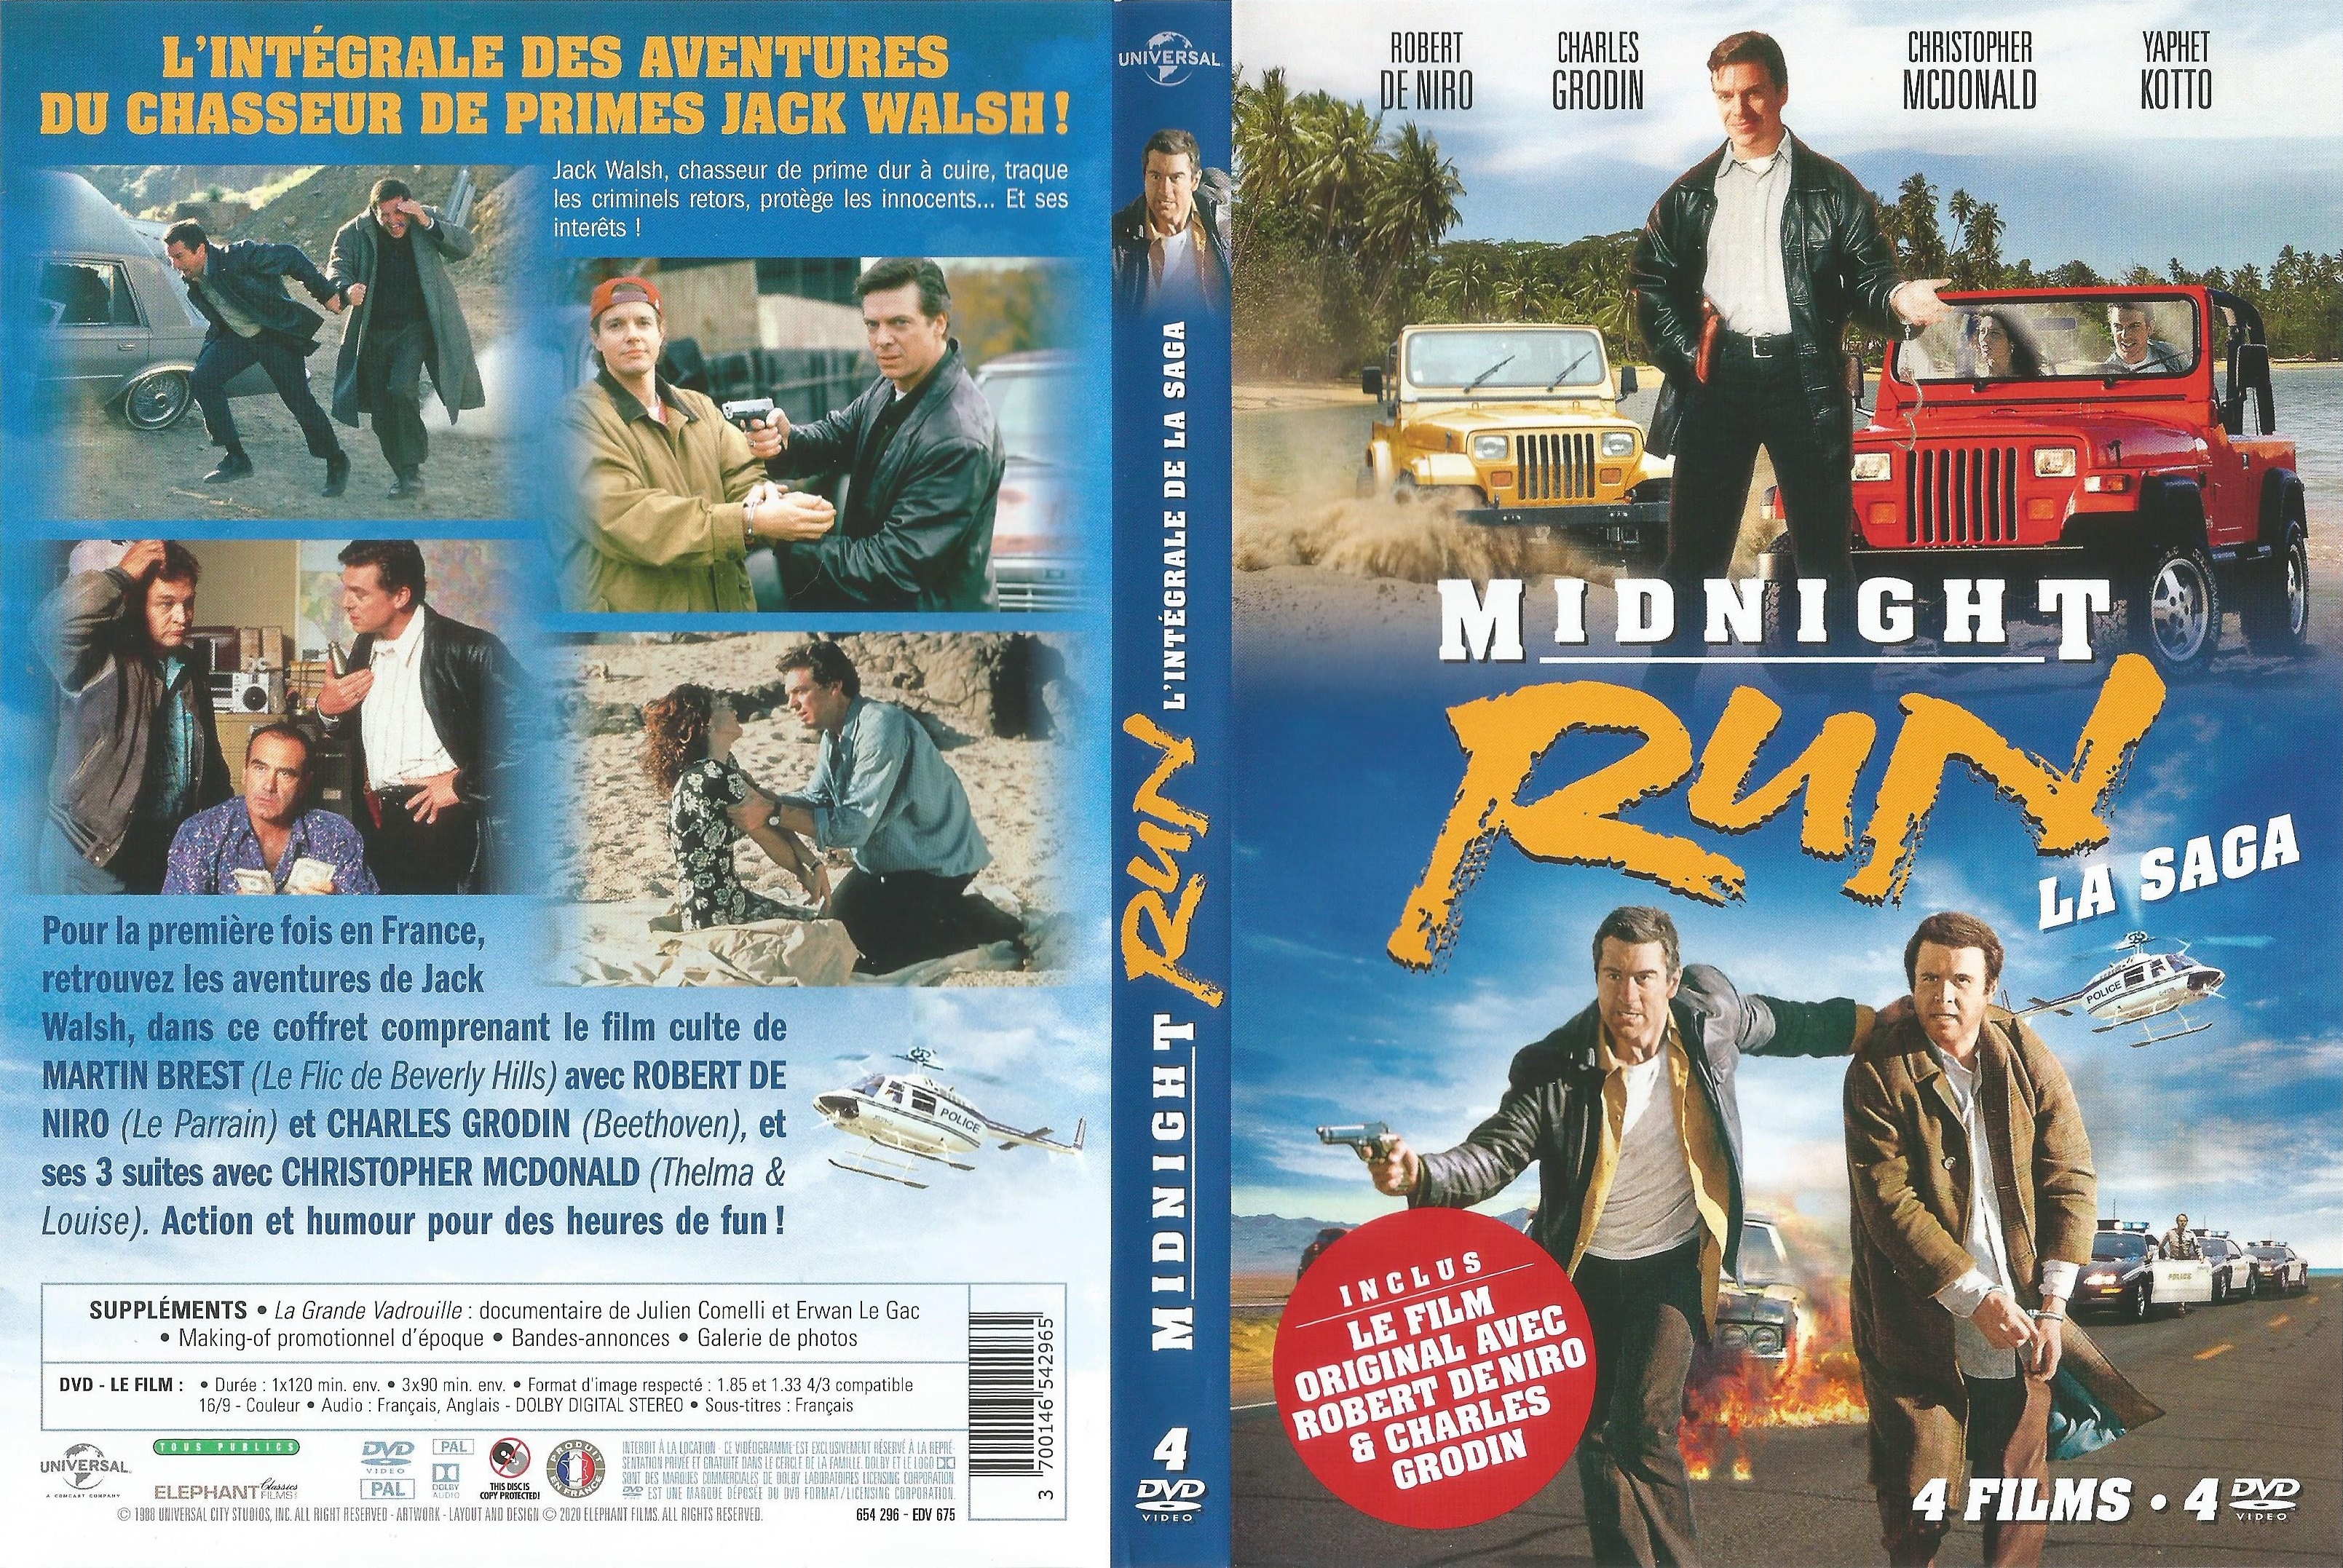 Jaquette DVD Midnight Run la saga